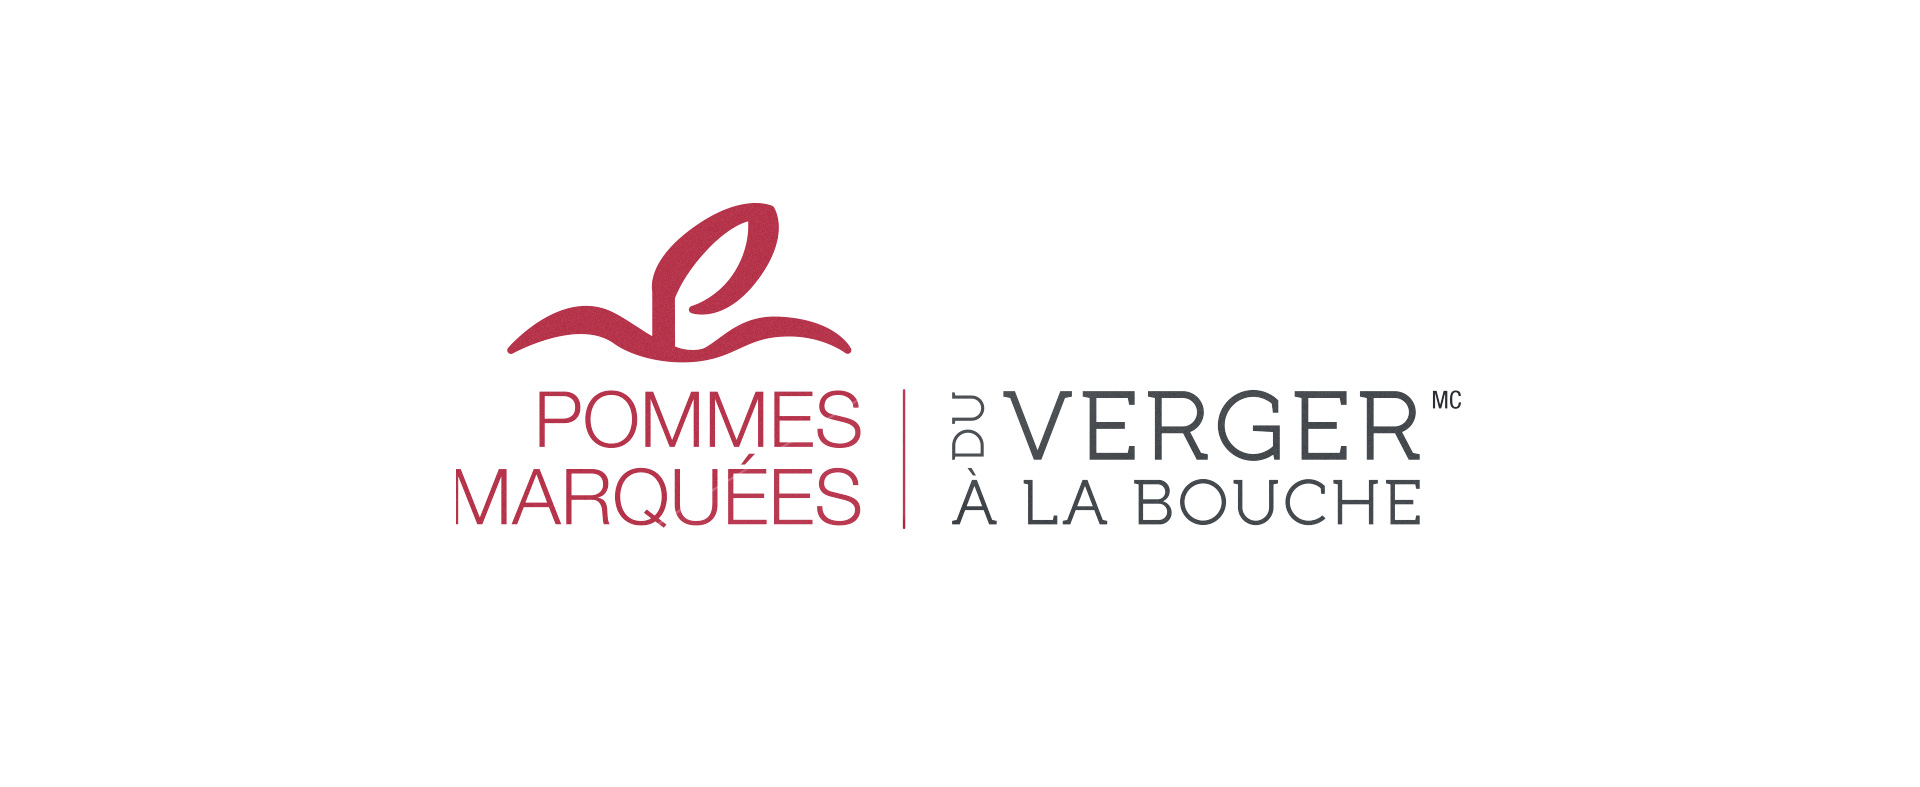 Campagne 2017 - Logo Pommes Marquées - Duo